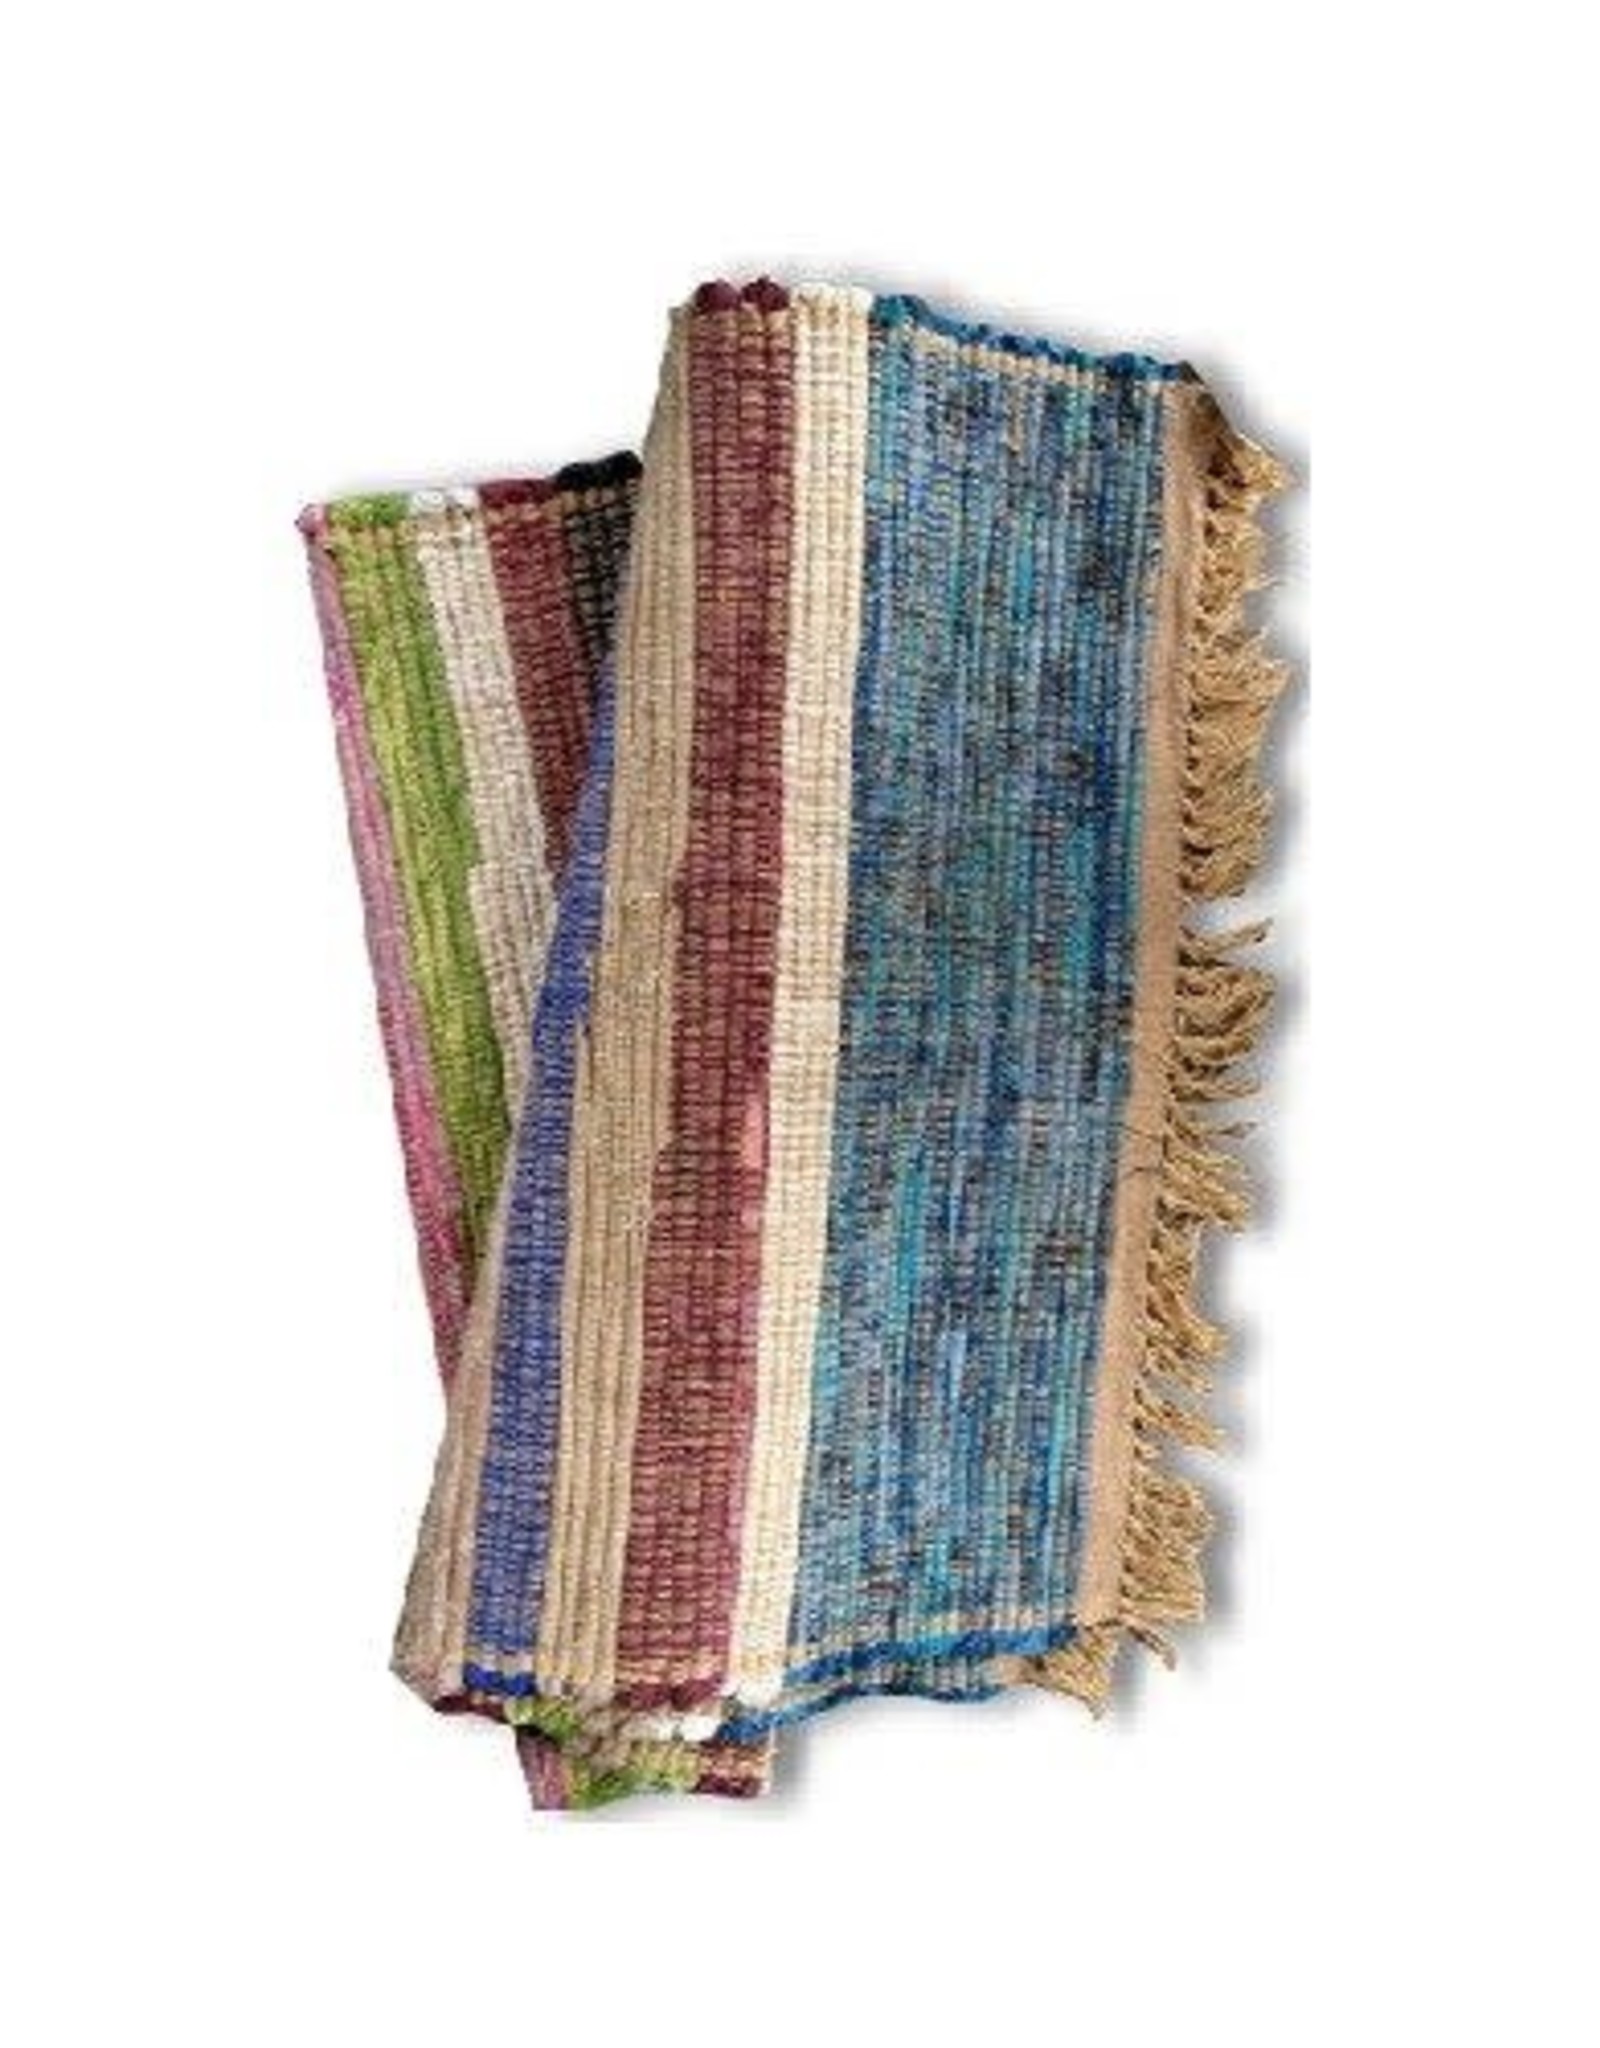 Nepal Handwoven Cotton Rag Rug (18x44"), Nepal